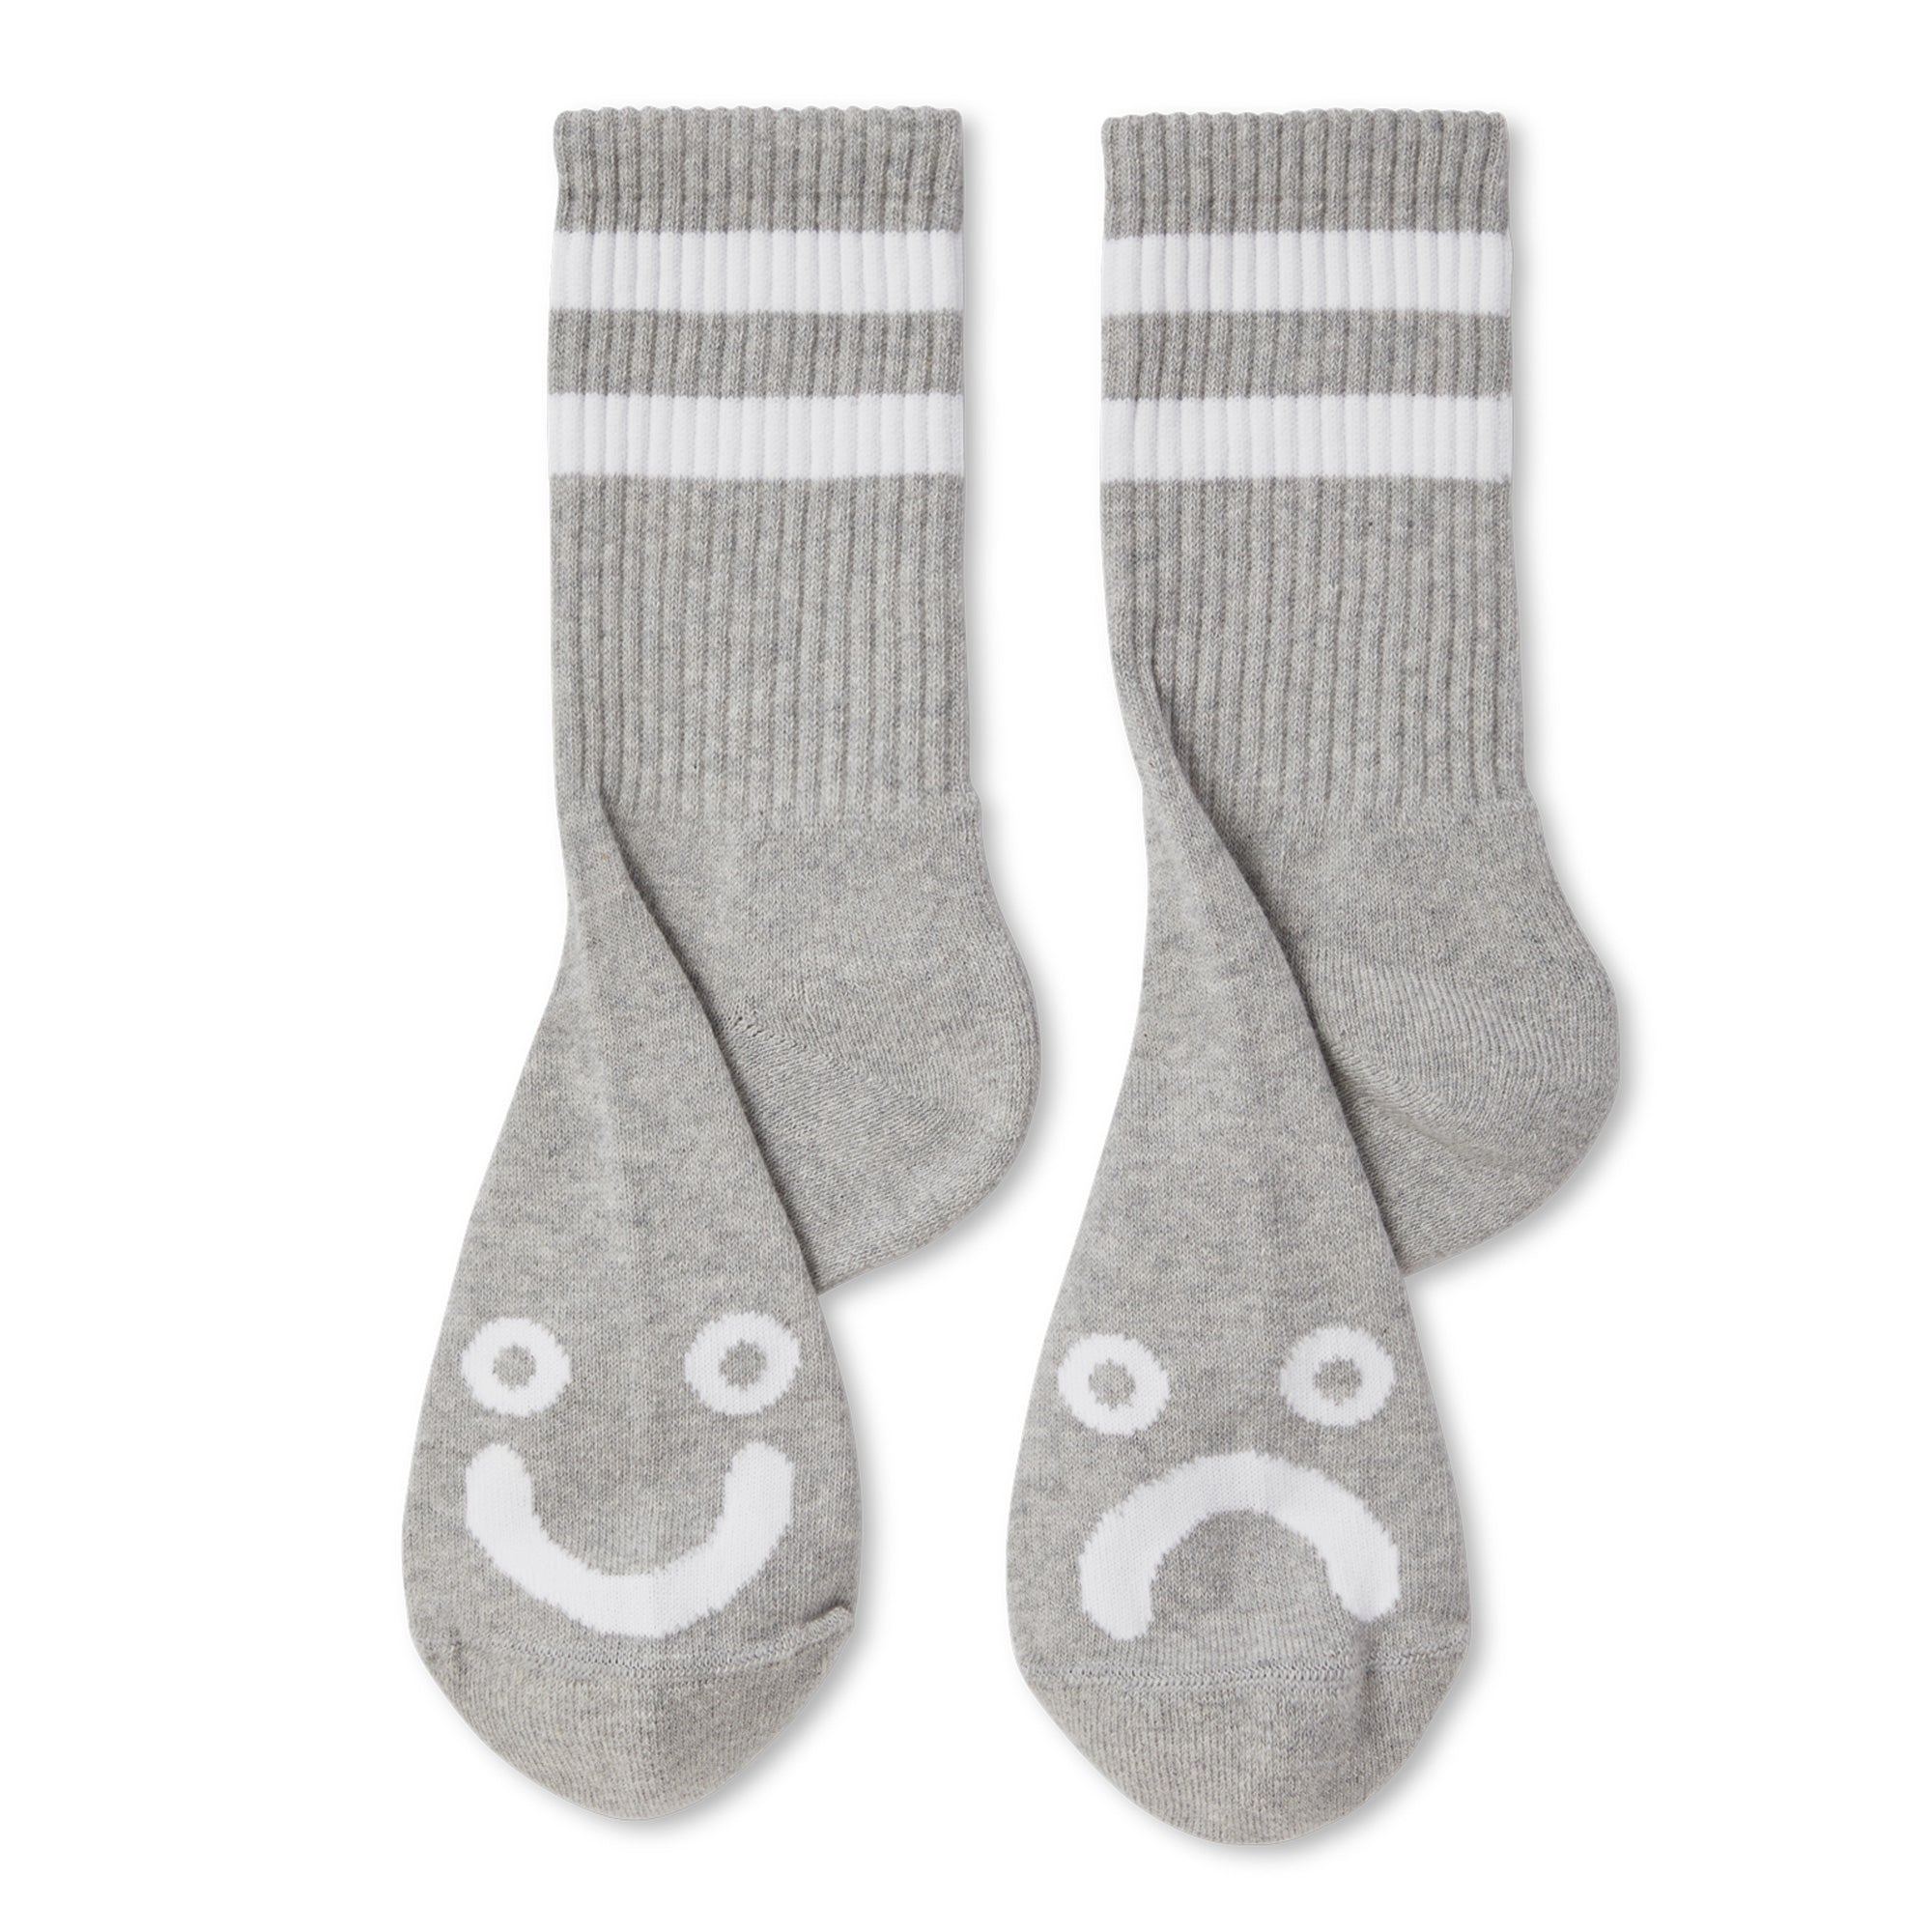 Polar Happy Sad Socks - Heather Grey